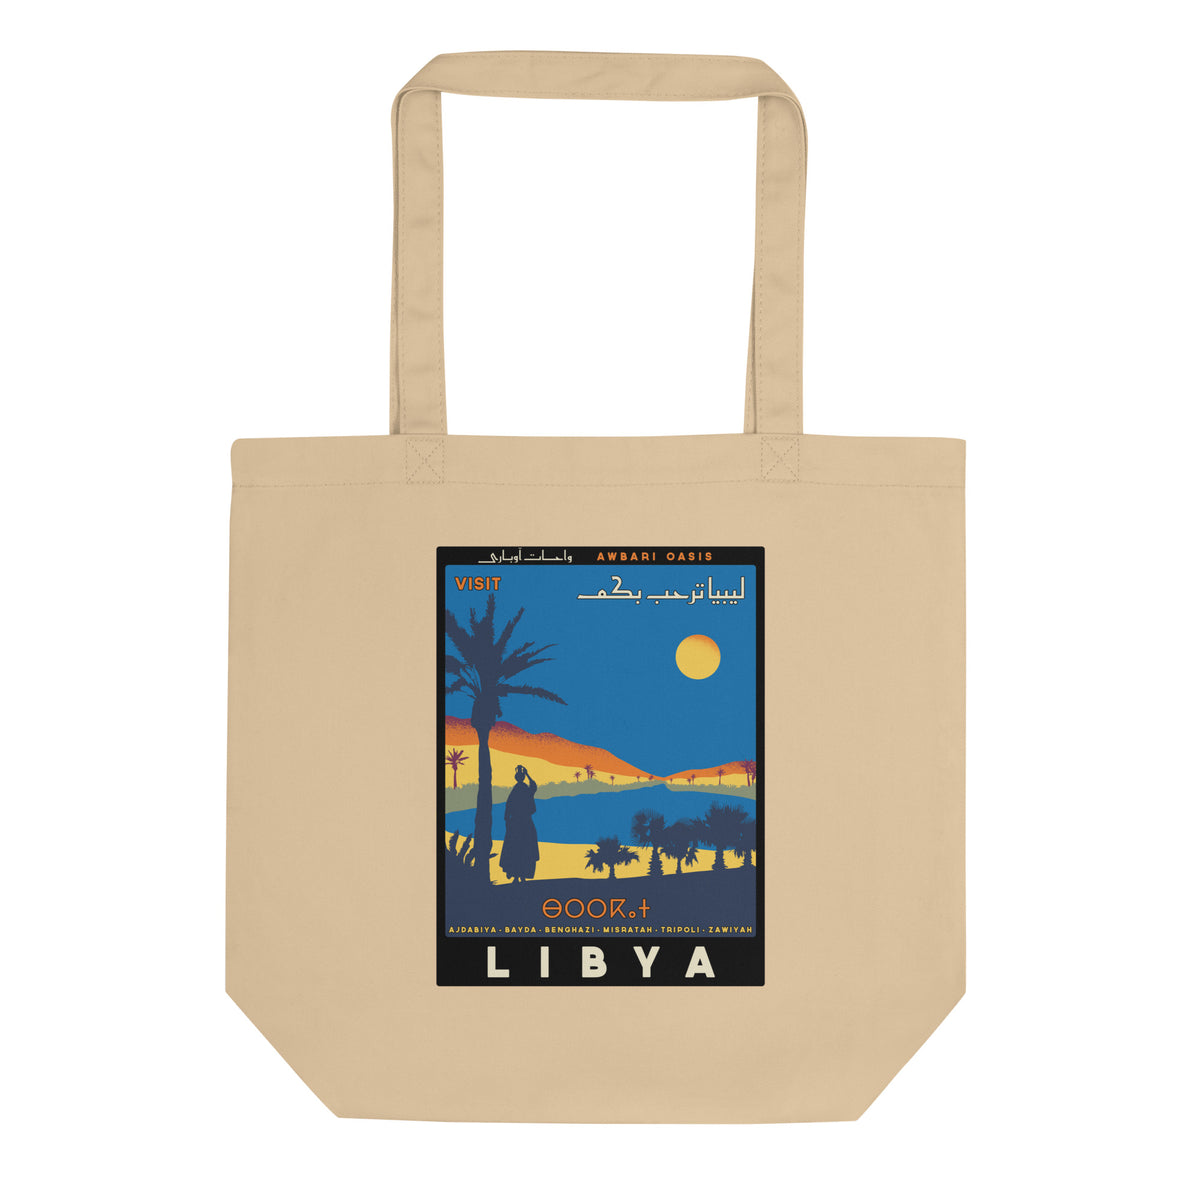 Travel Libya - Tote